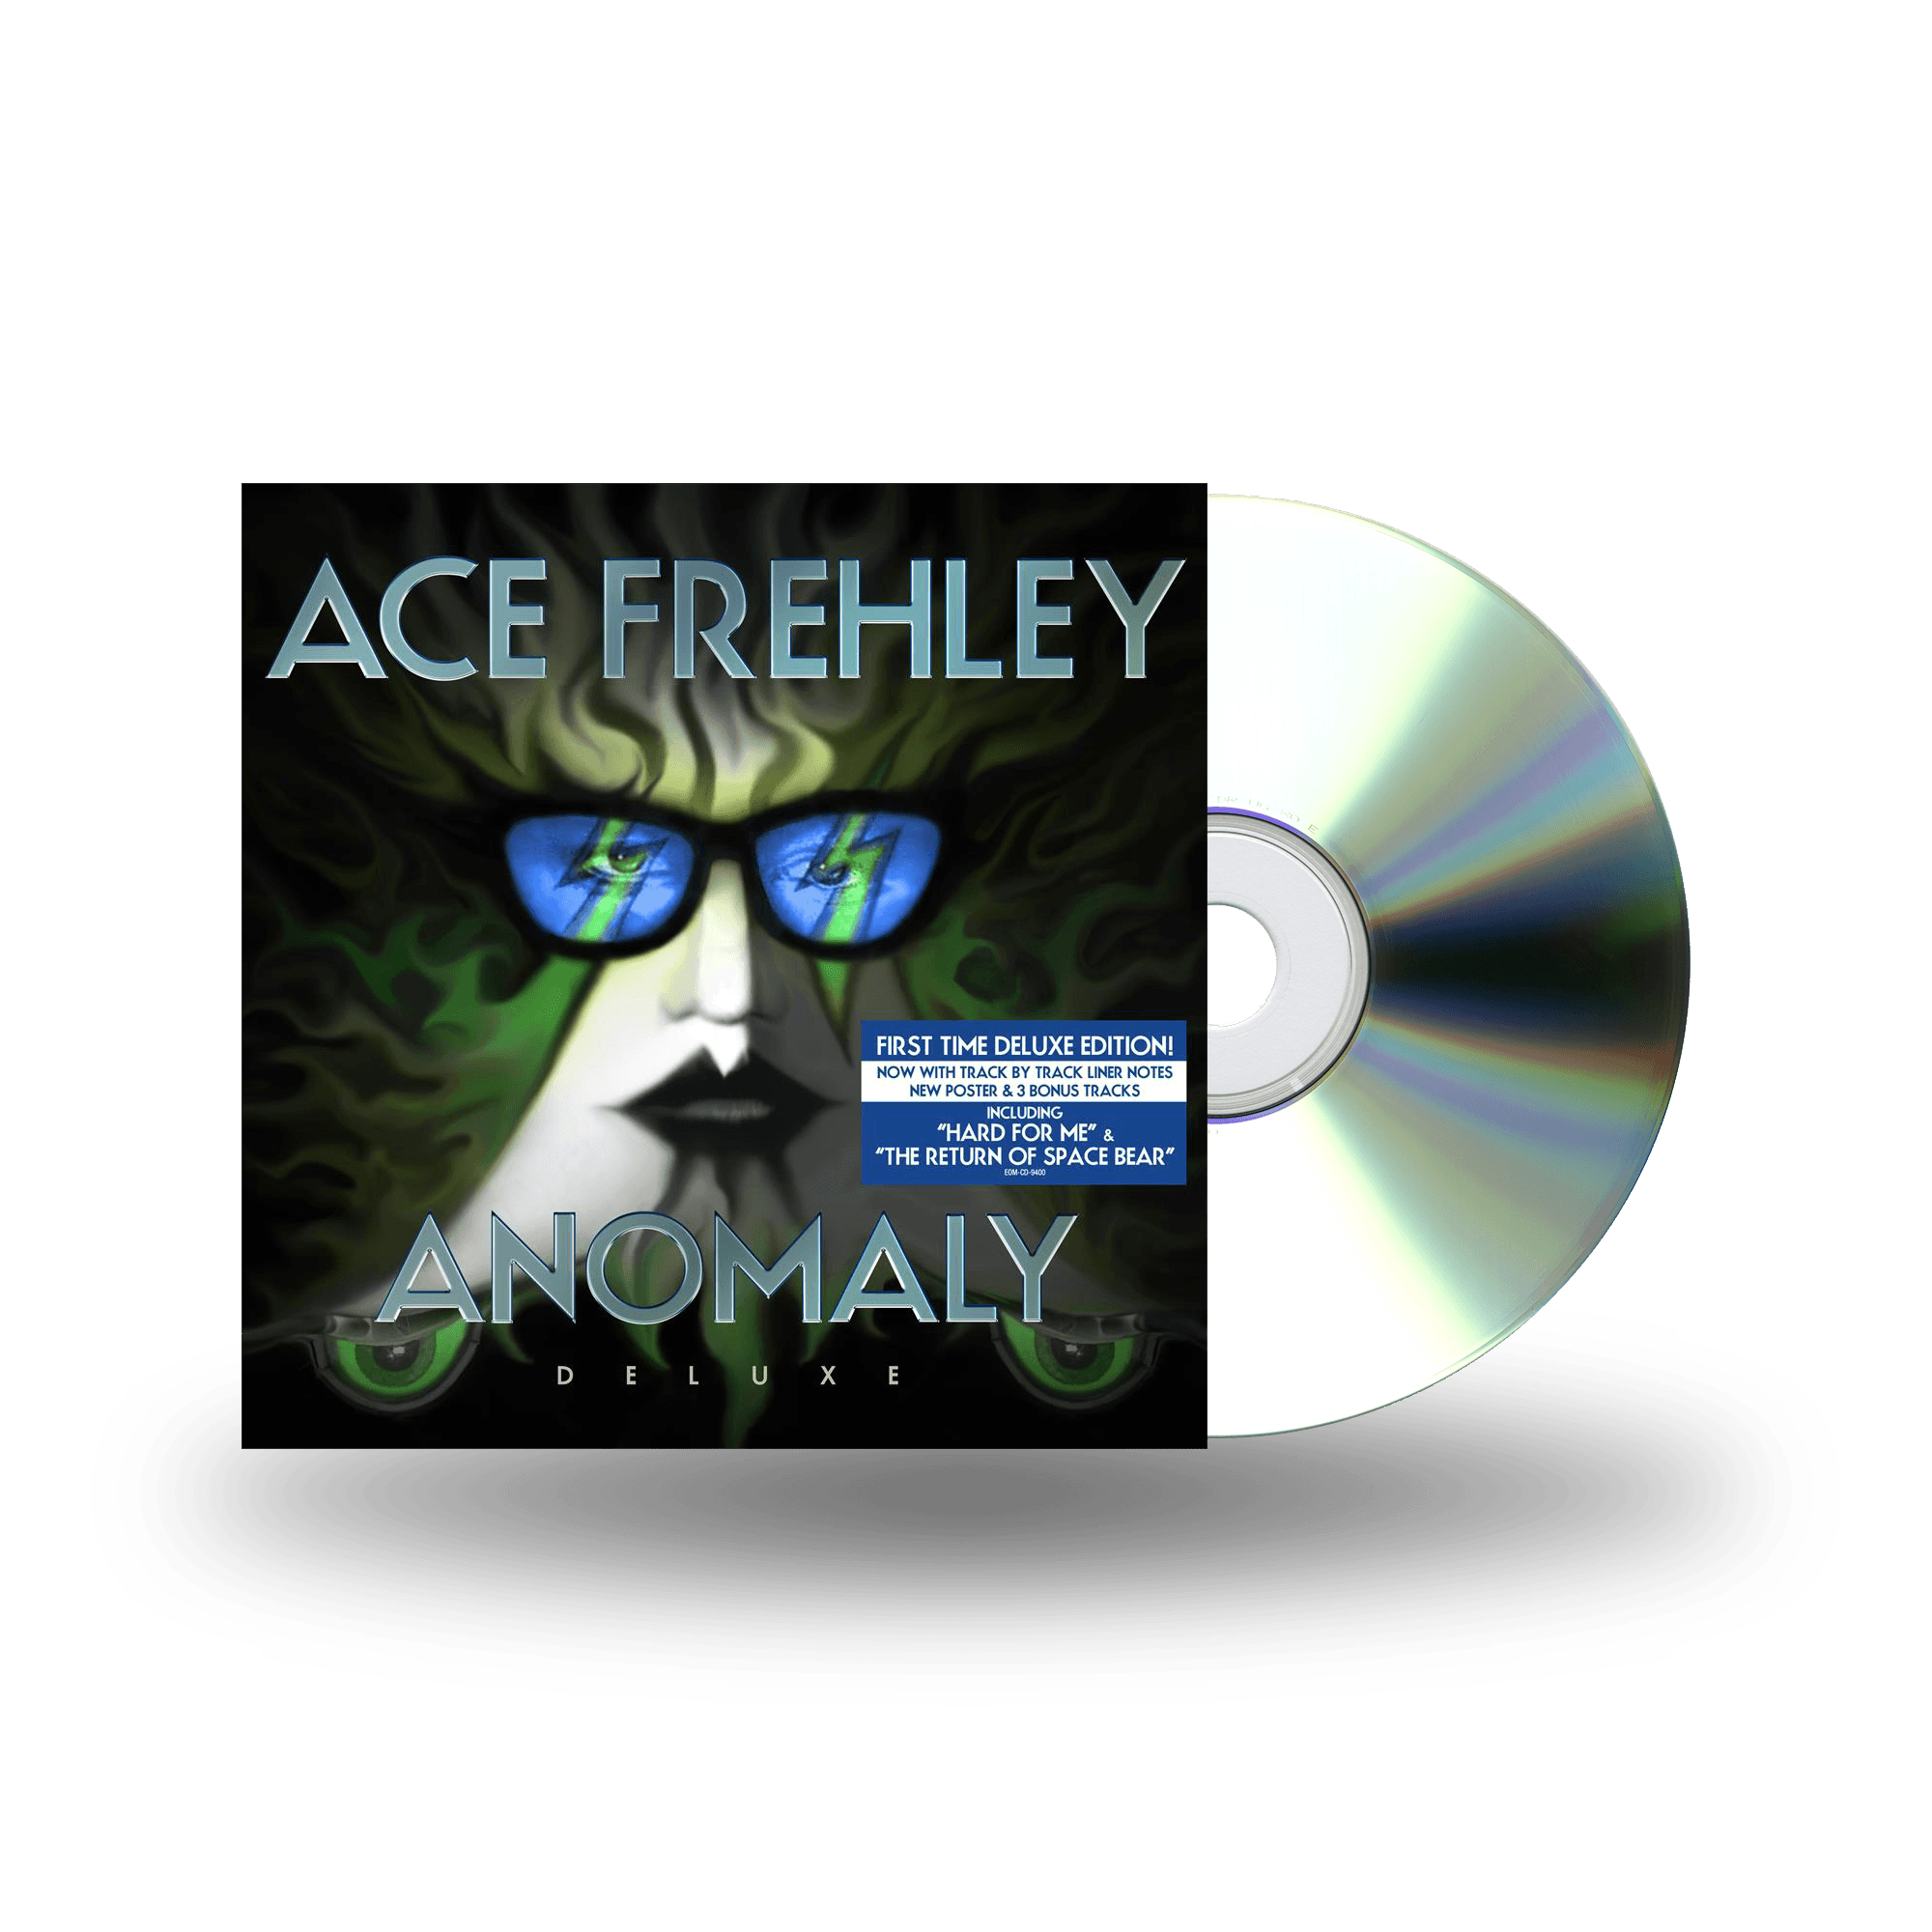 Ace Frehley - "Anomaly" Deluxe Digi-Pak CD - MNRK Heavy